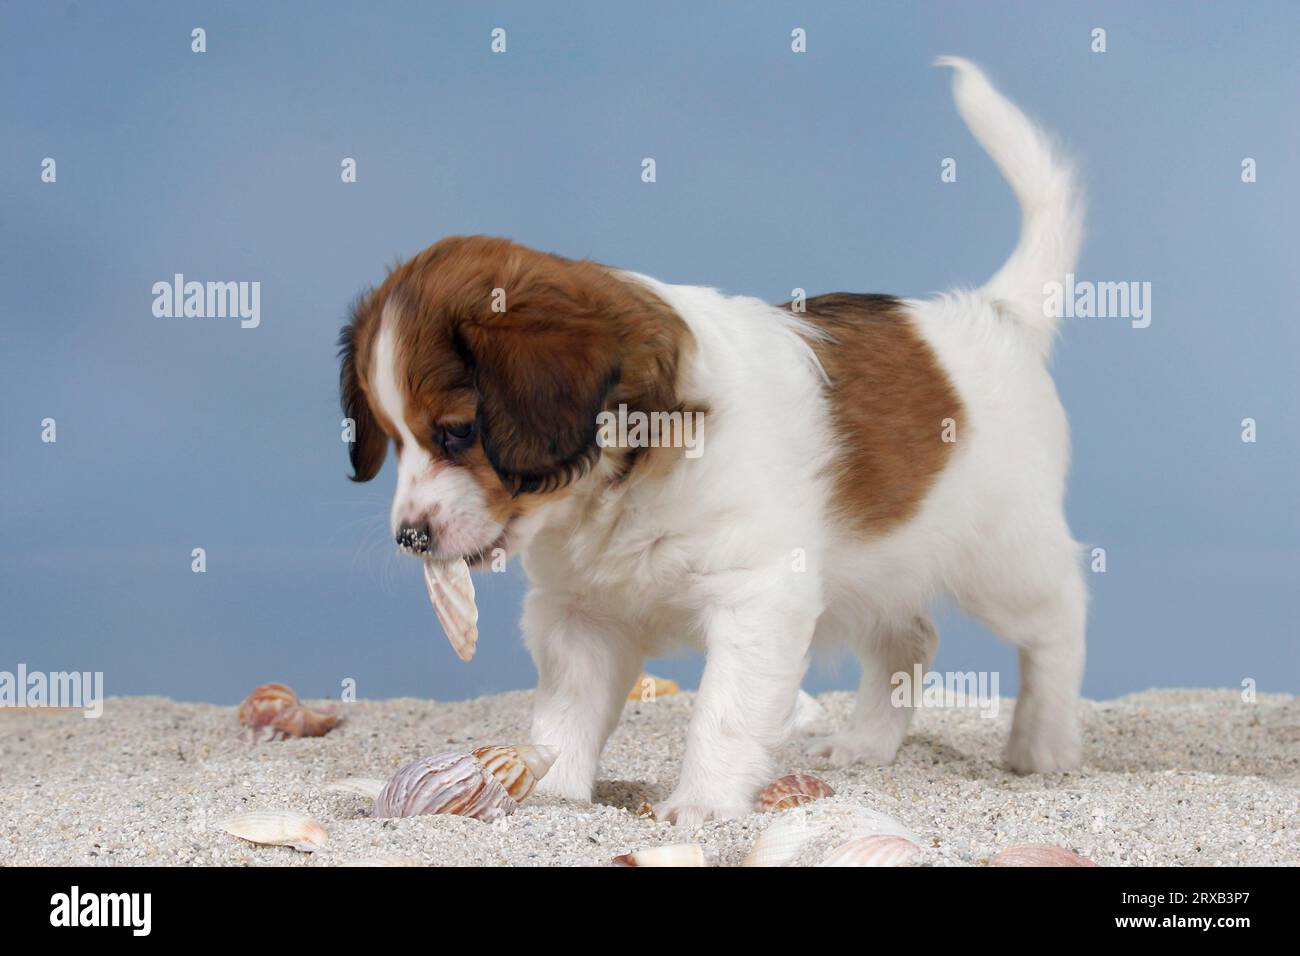 Kooikerhondje, puppy, 6 weeks, playing with clam shell Stock Photo